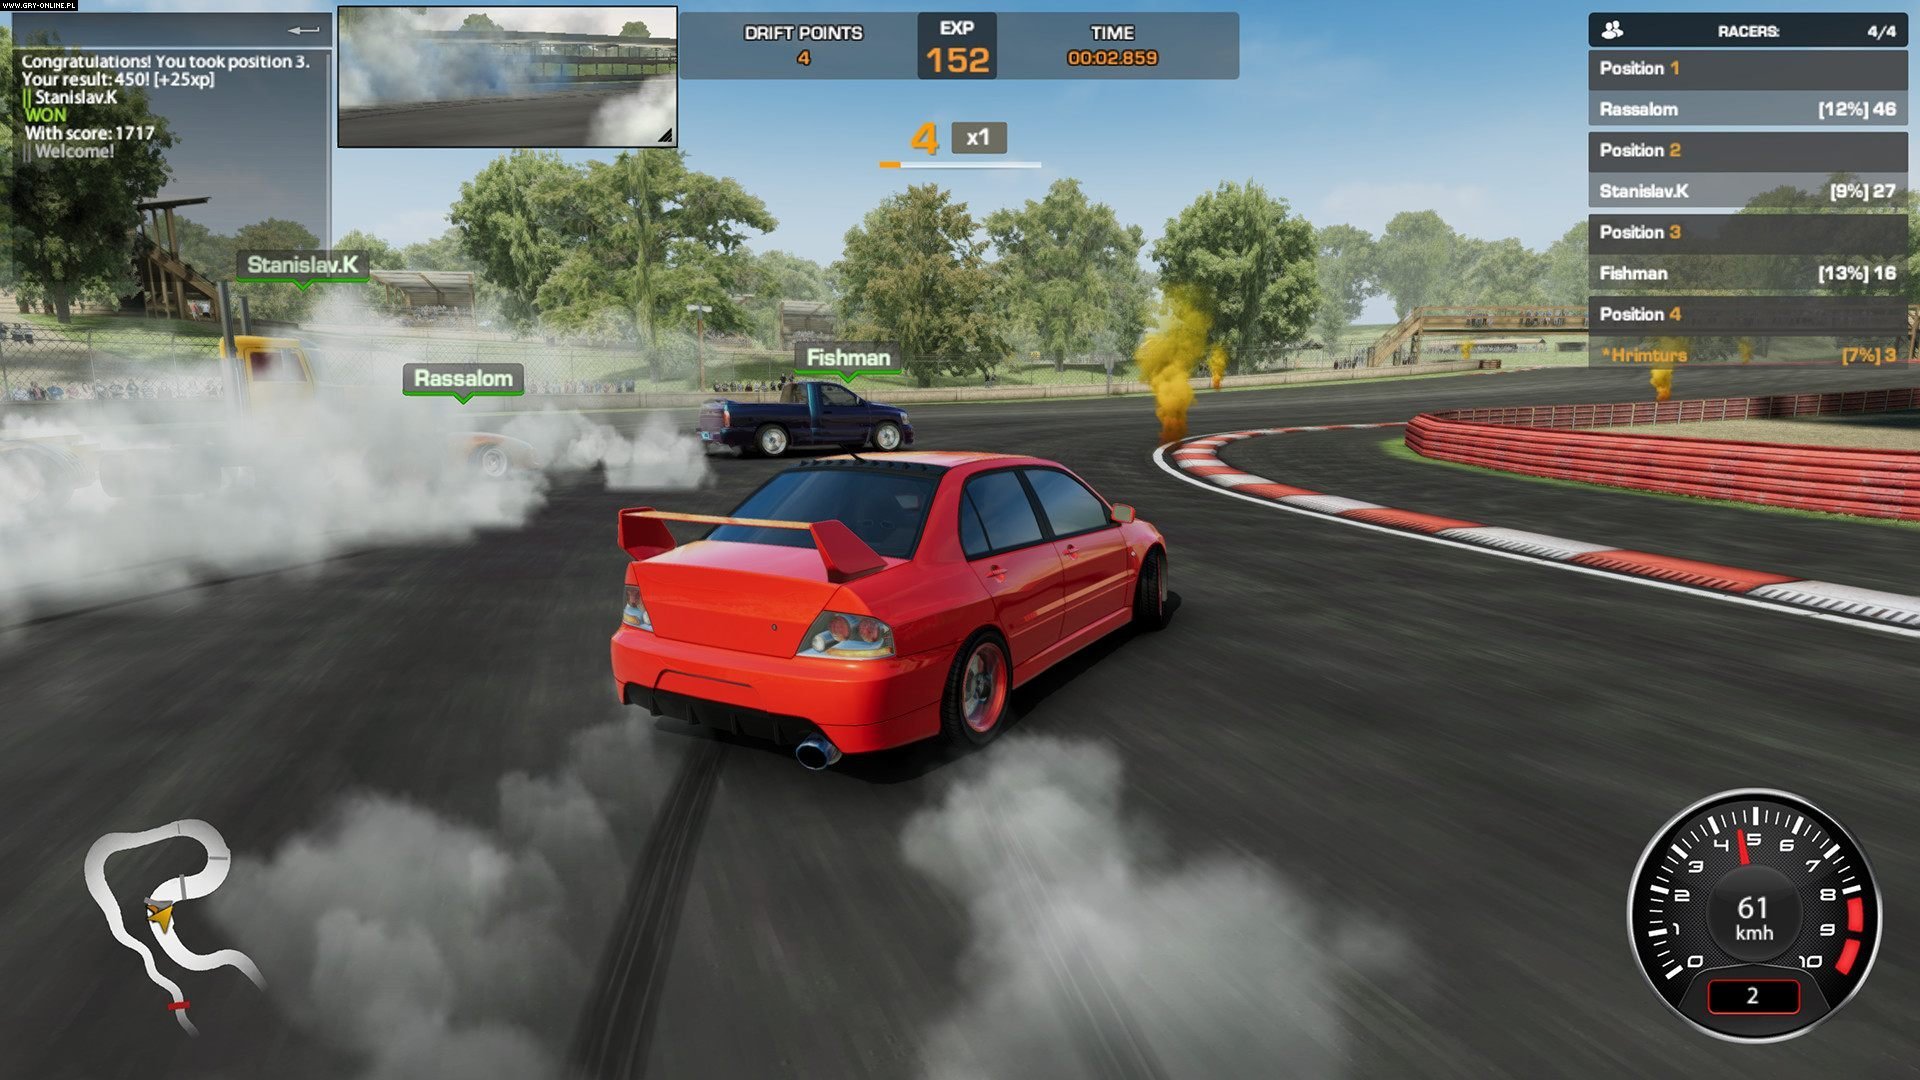 carx drift racing ps5